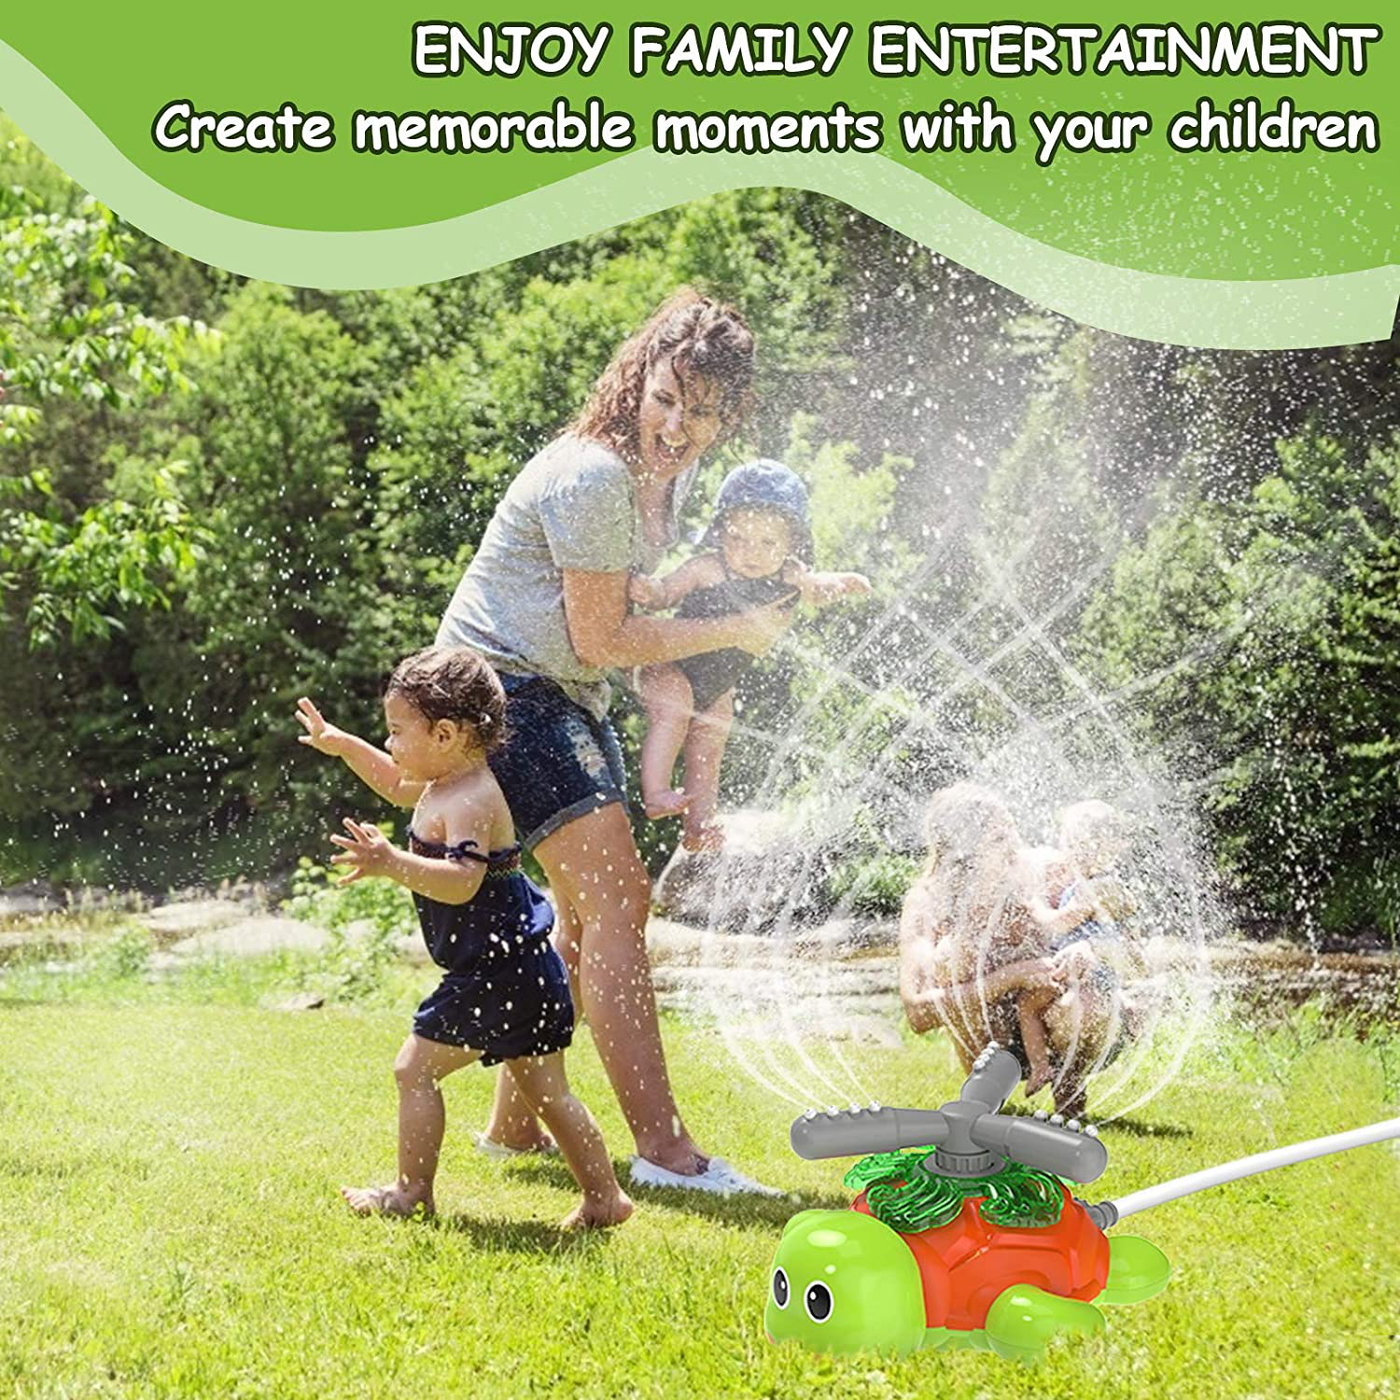 Kiztoys Water Sprinklers for Kids and Toddler Outdoor Play,Turtle Sprinkler of Yard, Pool Toy Sprinkler for Boys and Girls, Outdoor Lawn Sprinkler Toy, Splashing Fun for Summer Days